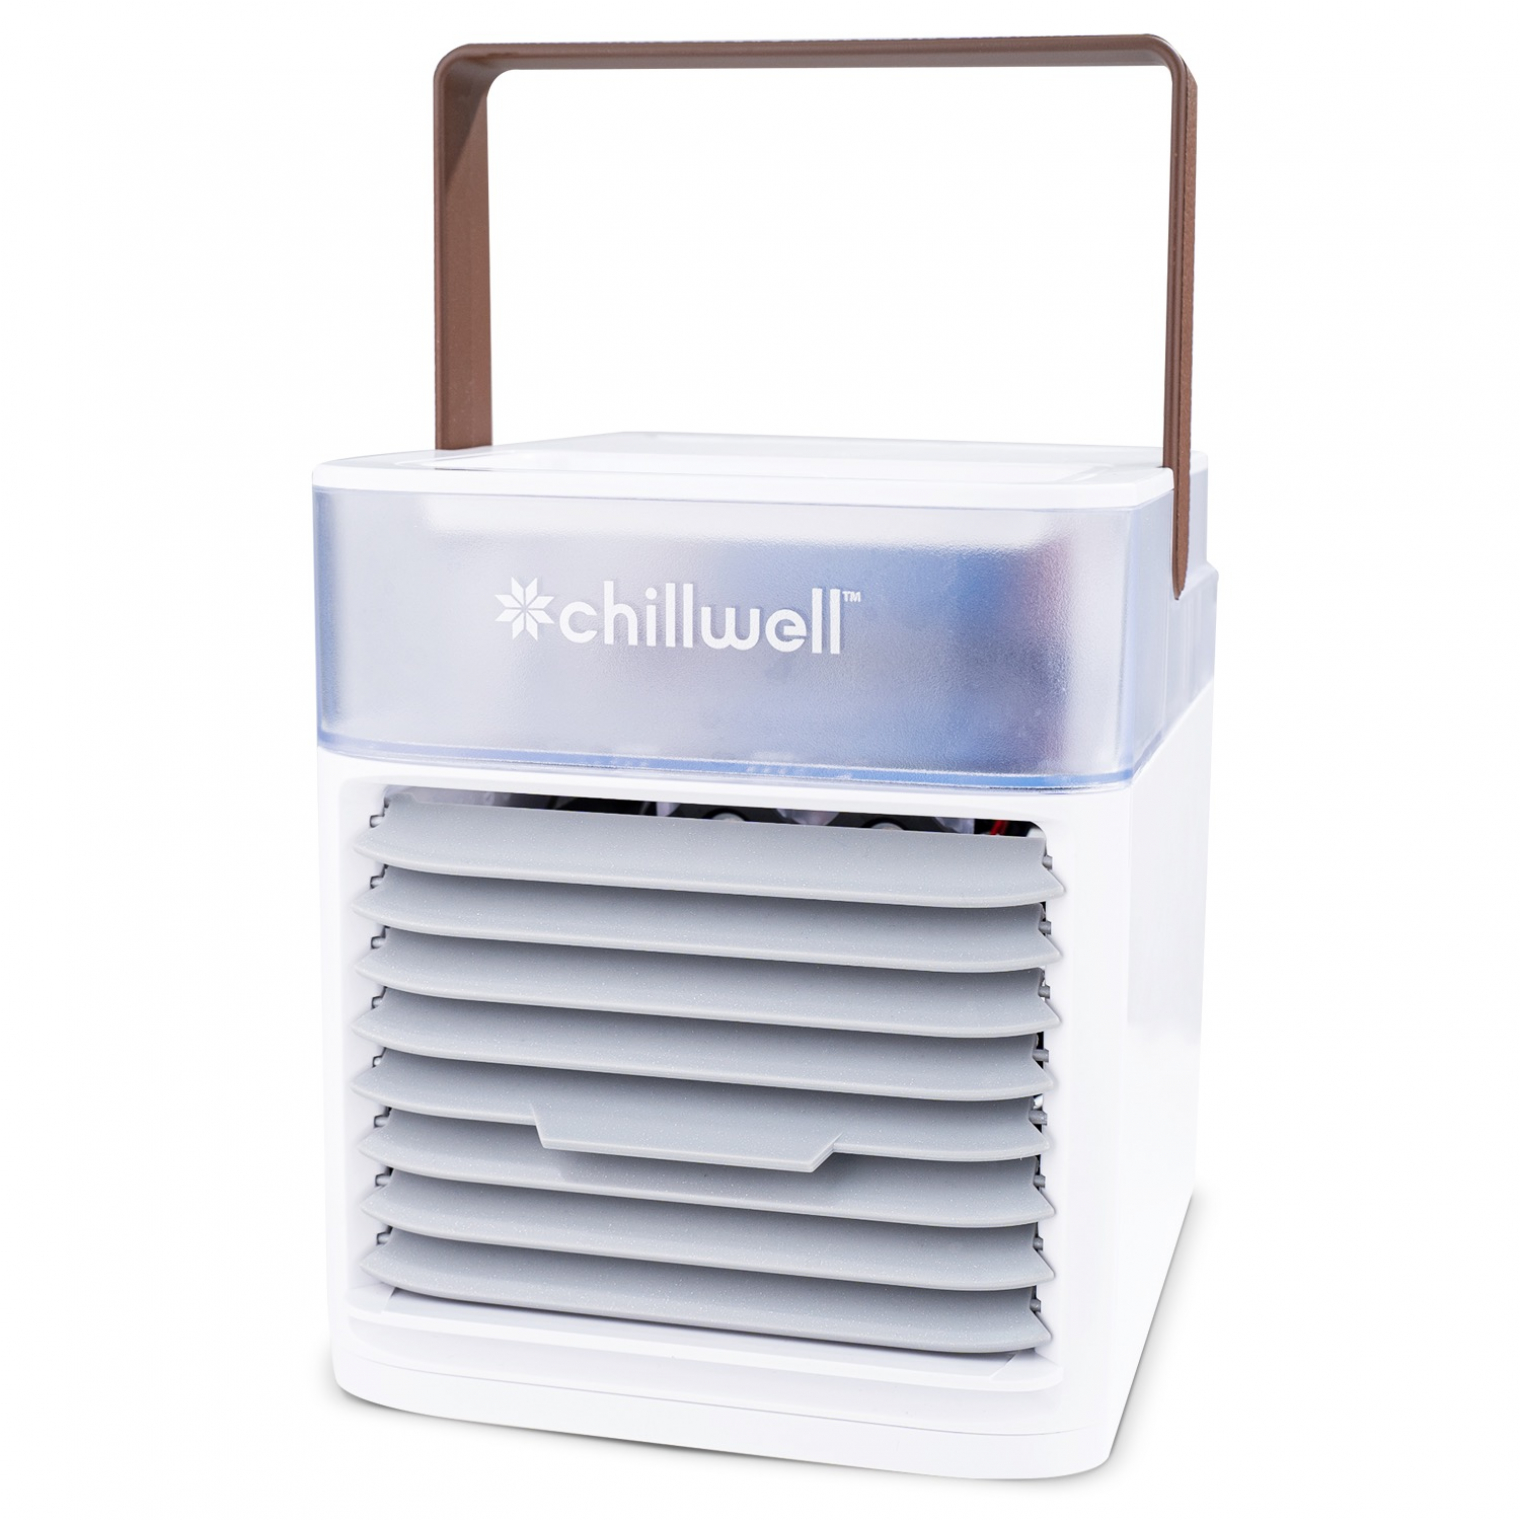 Chillwell Ac Conditioner